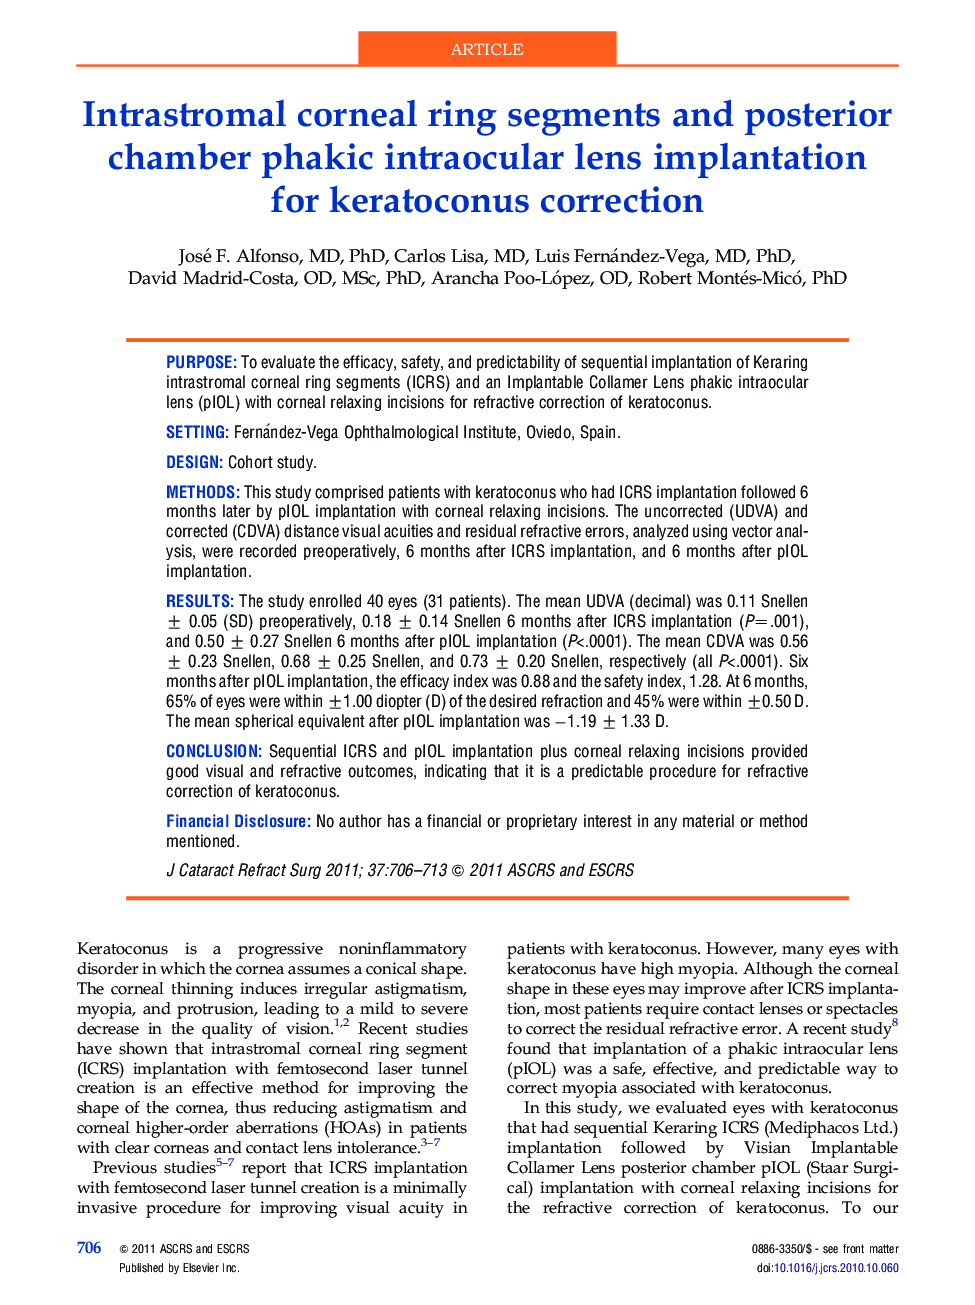 Intrastromal corneal ring segments and posterior chamber phakic intraocular lens implantation for keratoconus correction